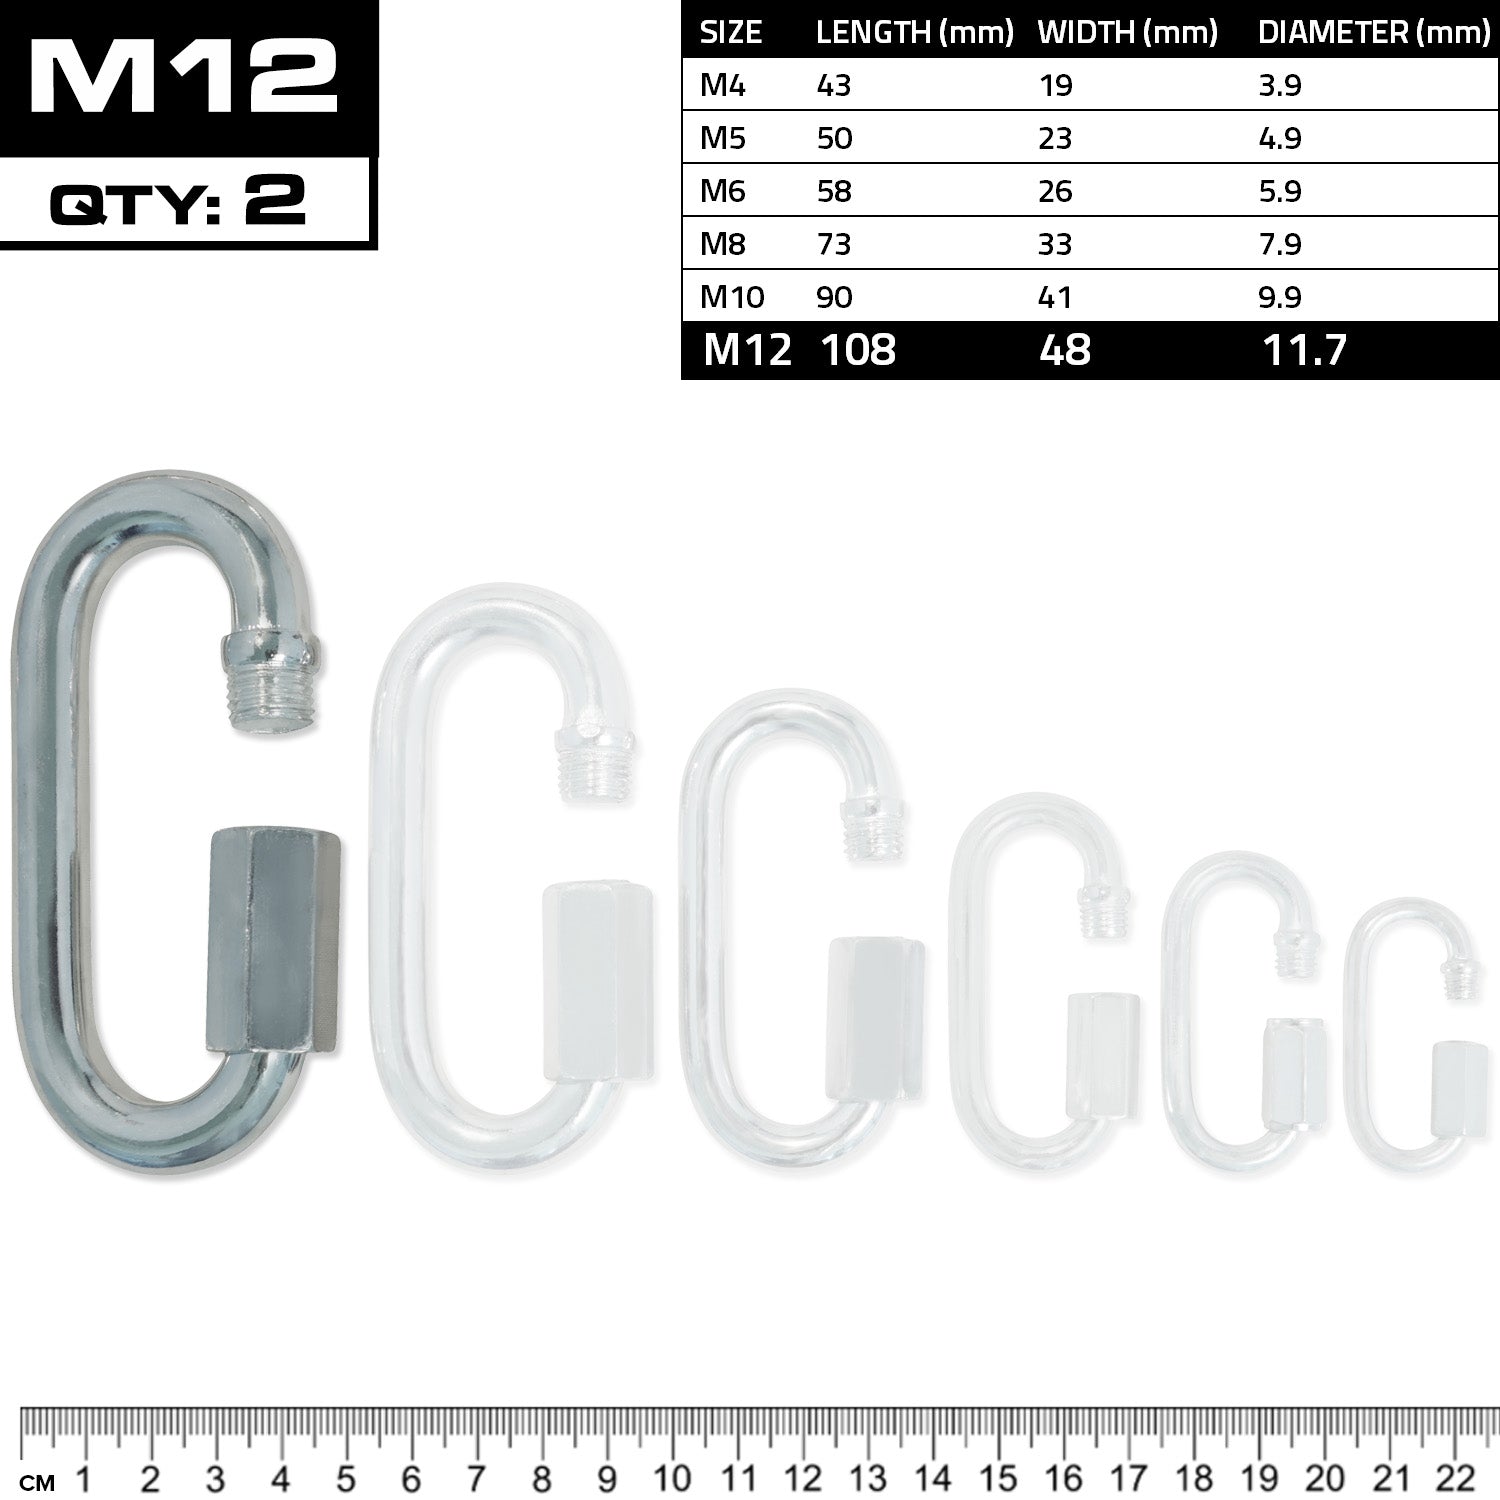 Meister Quick Link Screwlock Carabiners - M12 x 2 Pack